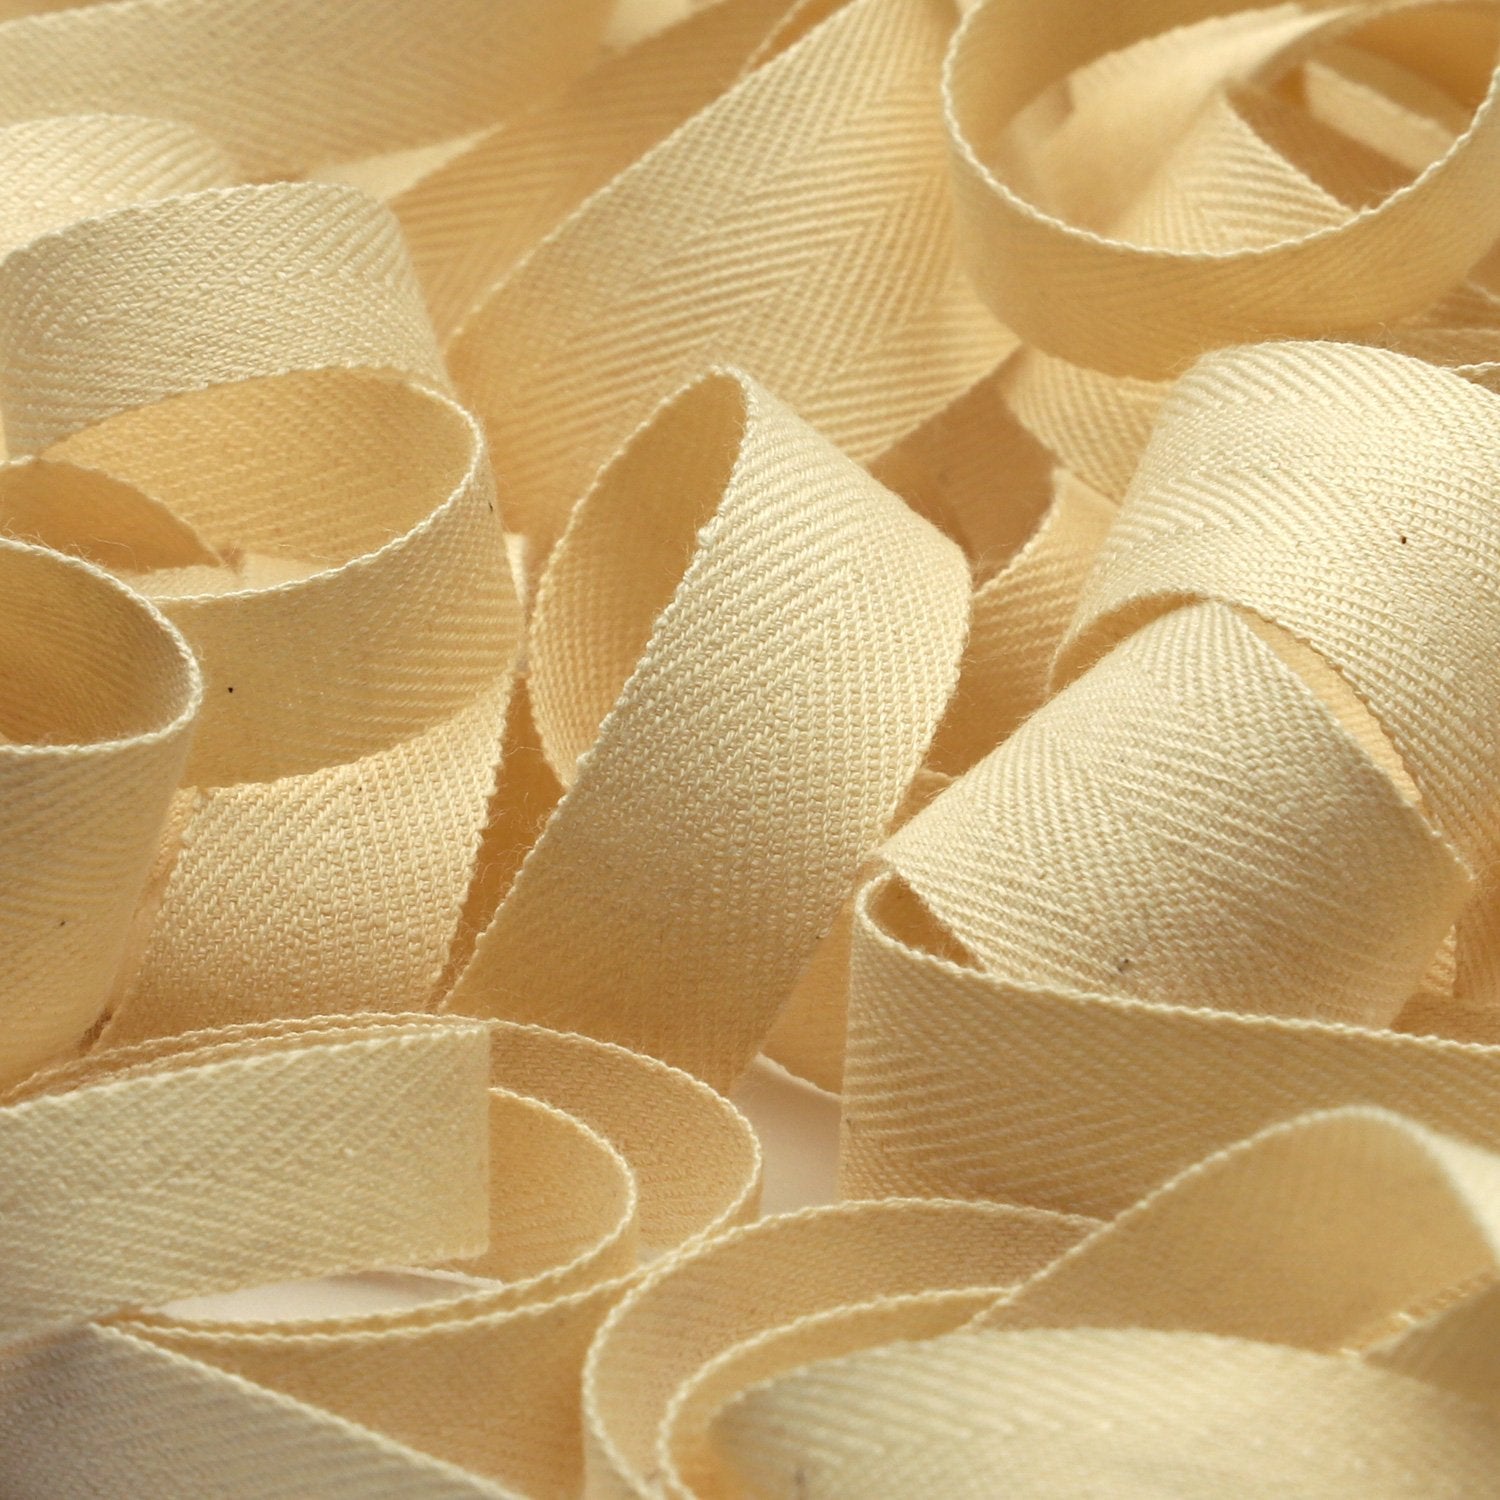 FUJIYAMA RIBBON Organic Cotton Herringbone Ribbon 9mm Ecru 9.14 Meters Roll